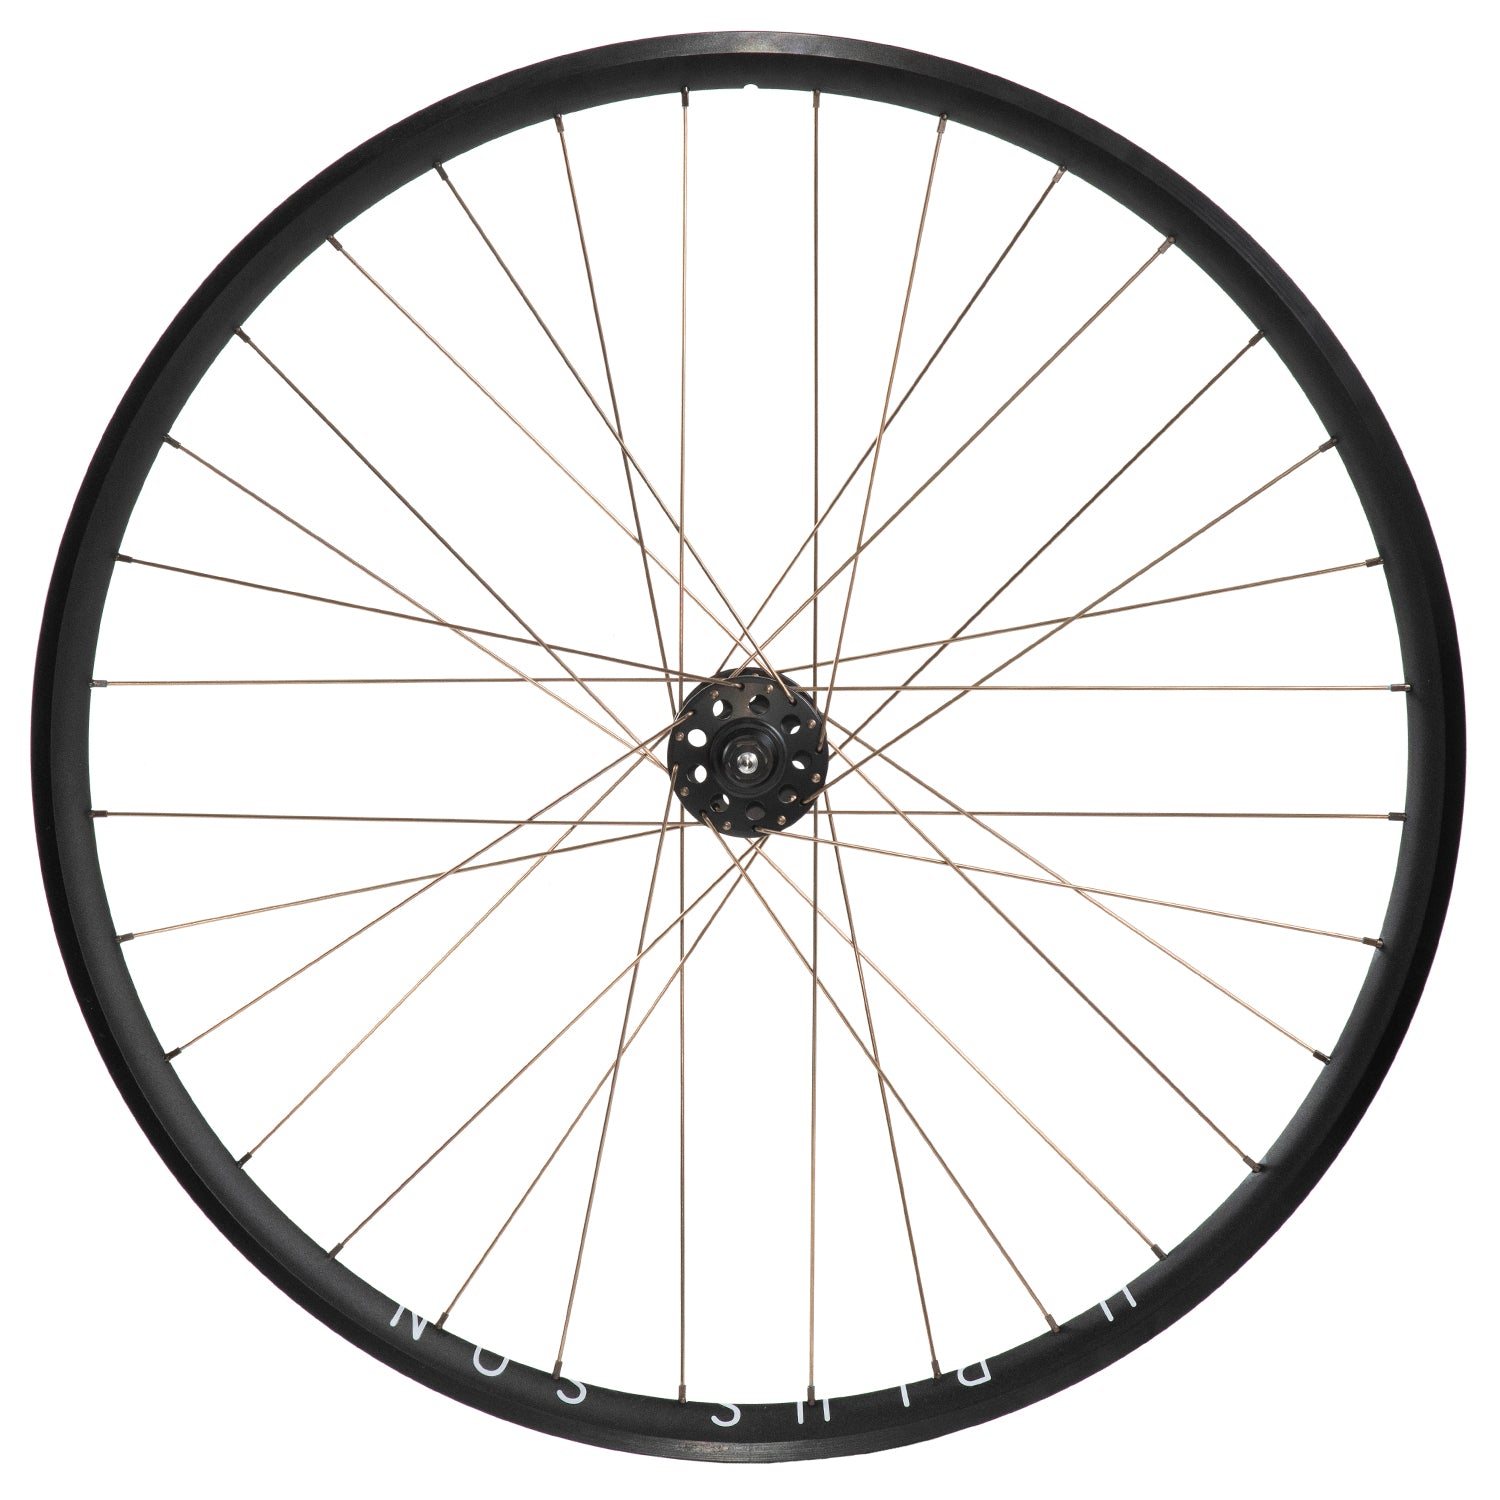 GORILLA SPUN Build Wheel [H PLUS SON AT-25 x CYCROC Large Flange]